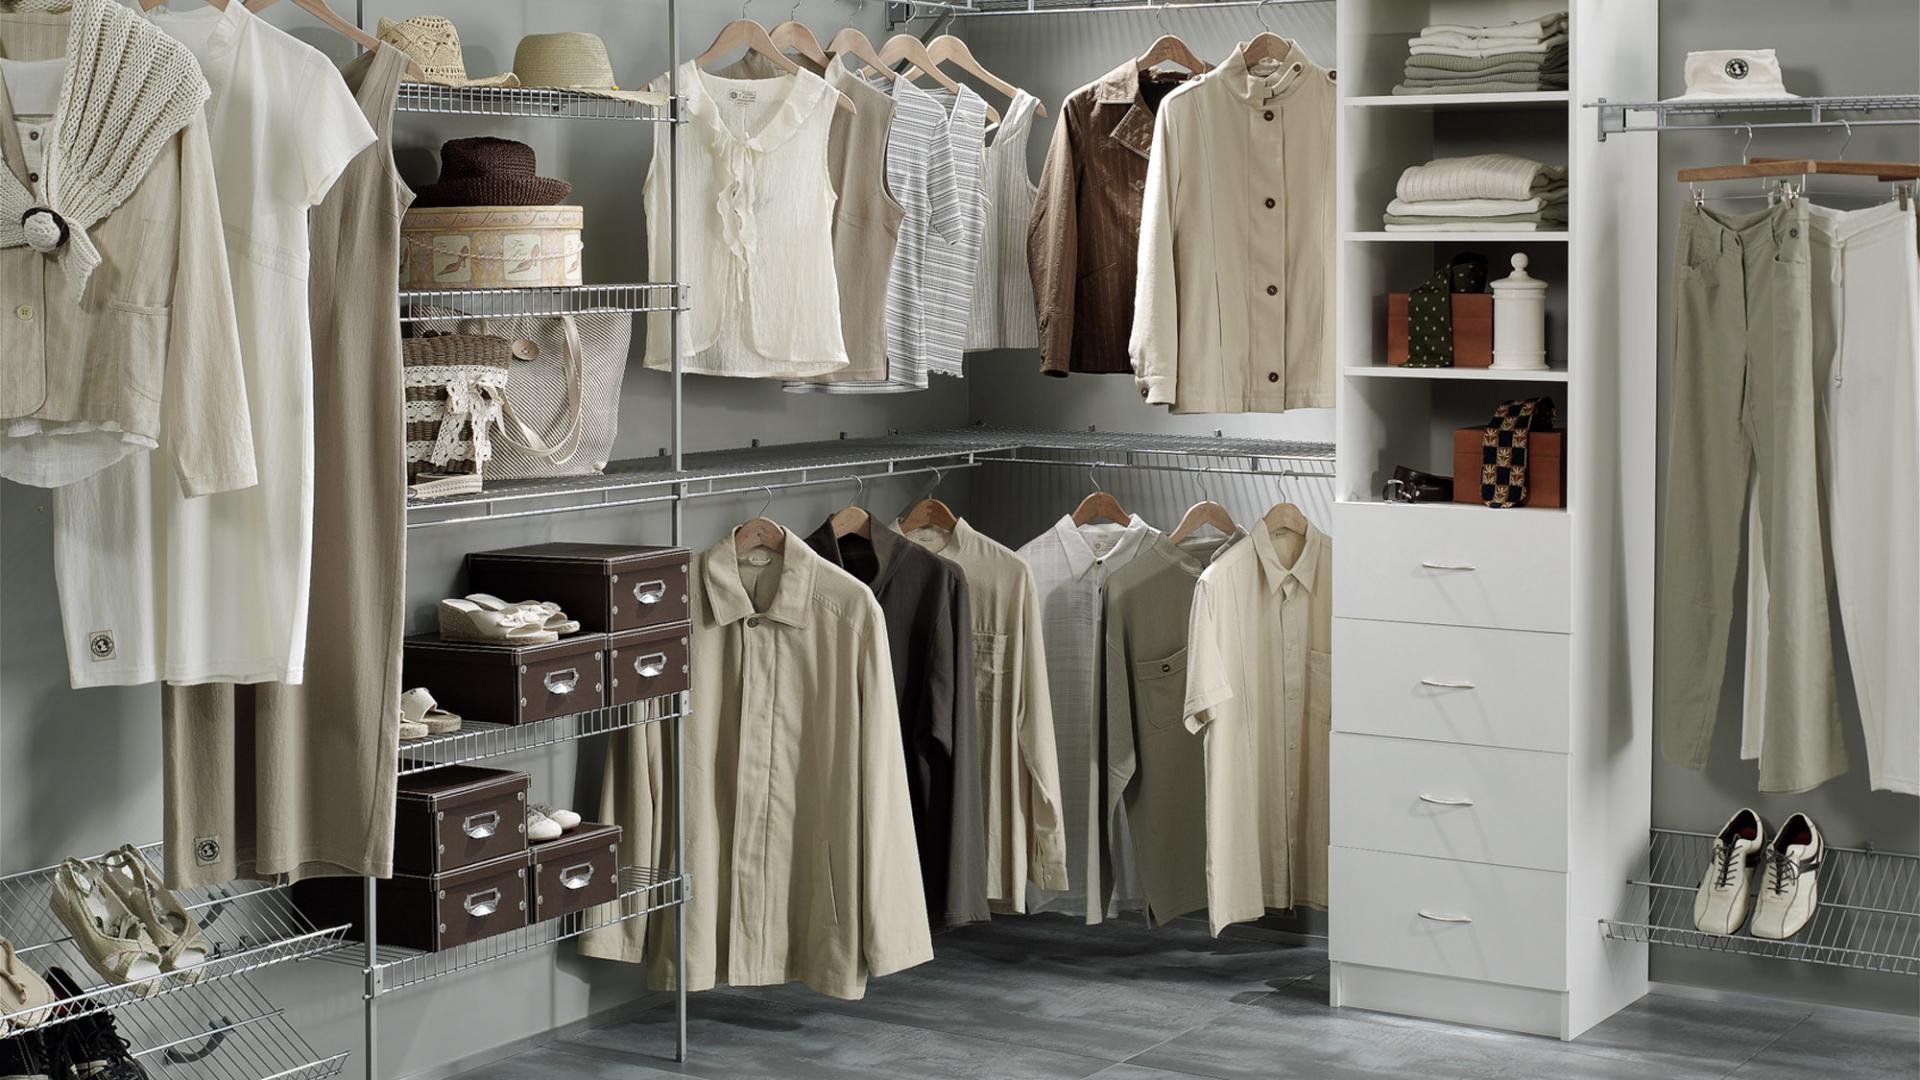 Wardrobe Systems for Best Organized Storage